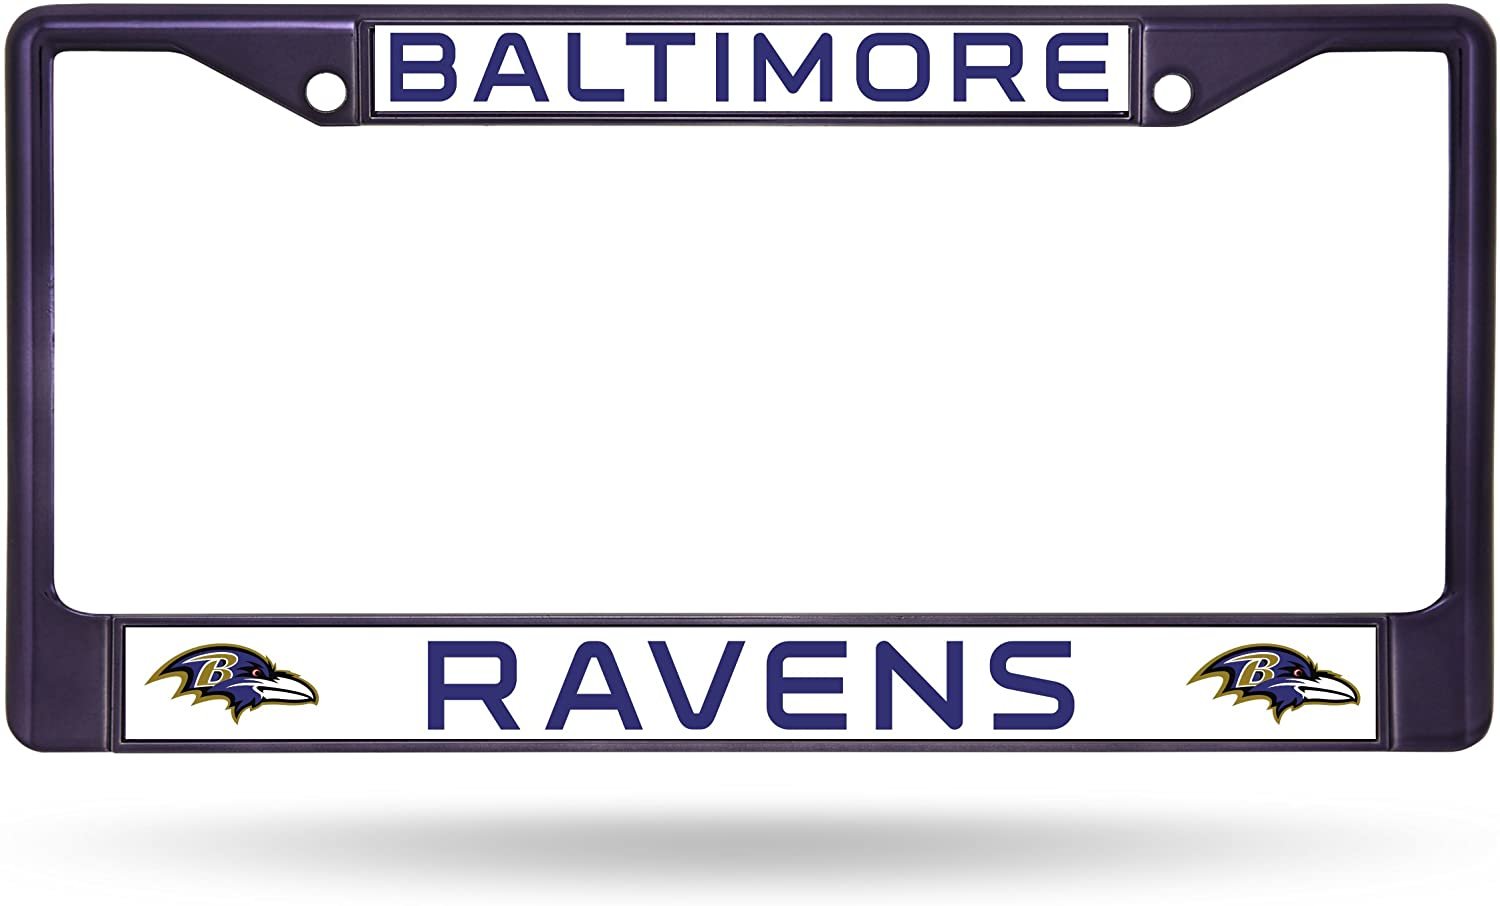 Baltimore Ravens Purple Metal License Plate Frame Chrome Tag Cover